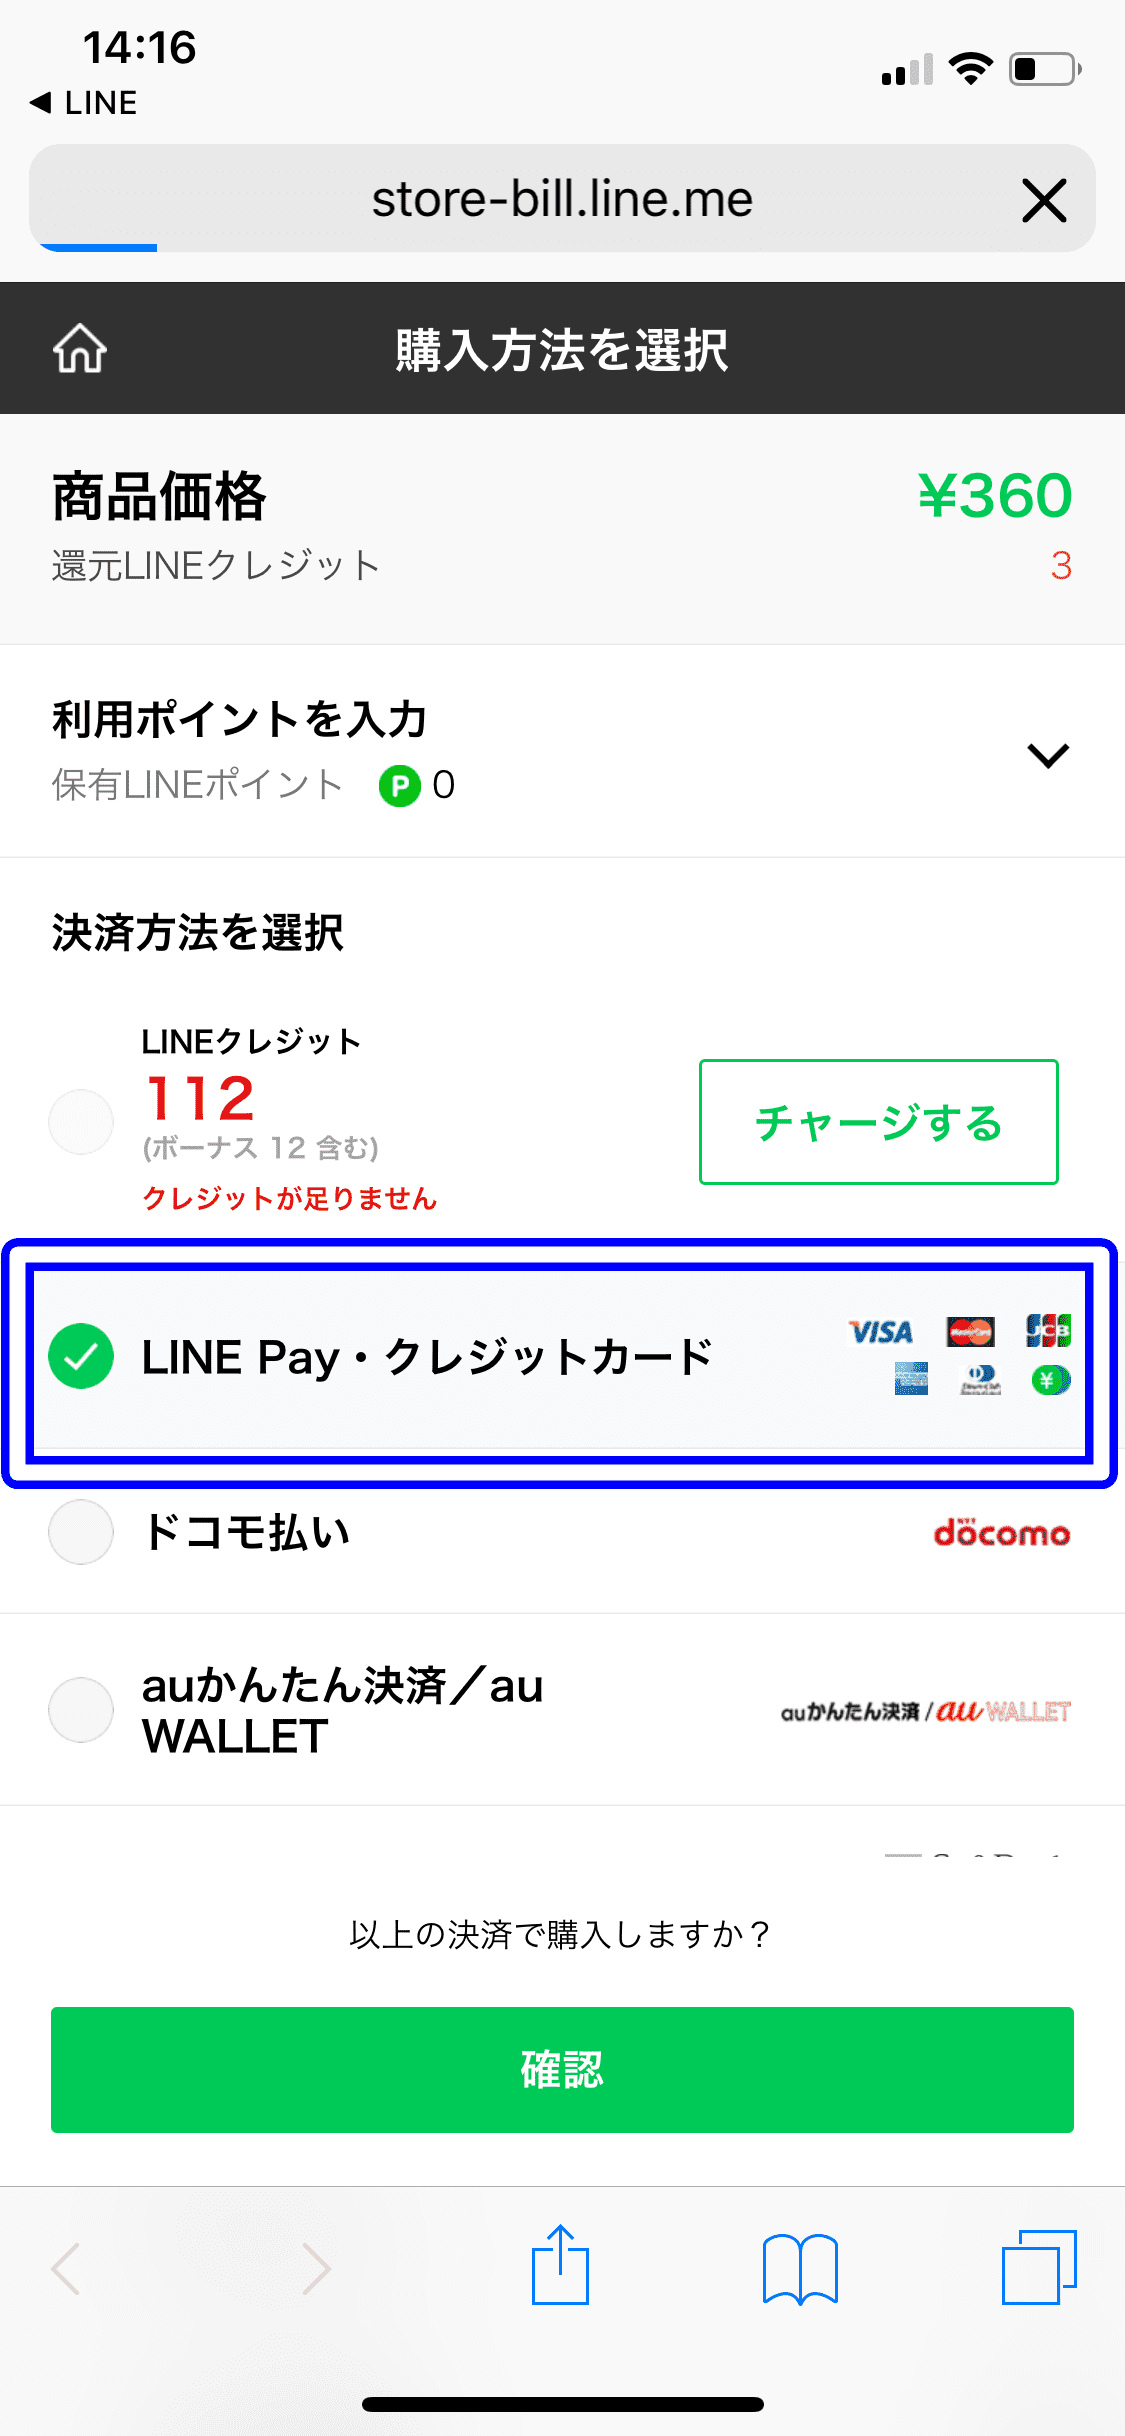 alt"LINE着せ替えを購入する際に表示される支払い選択画面"